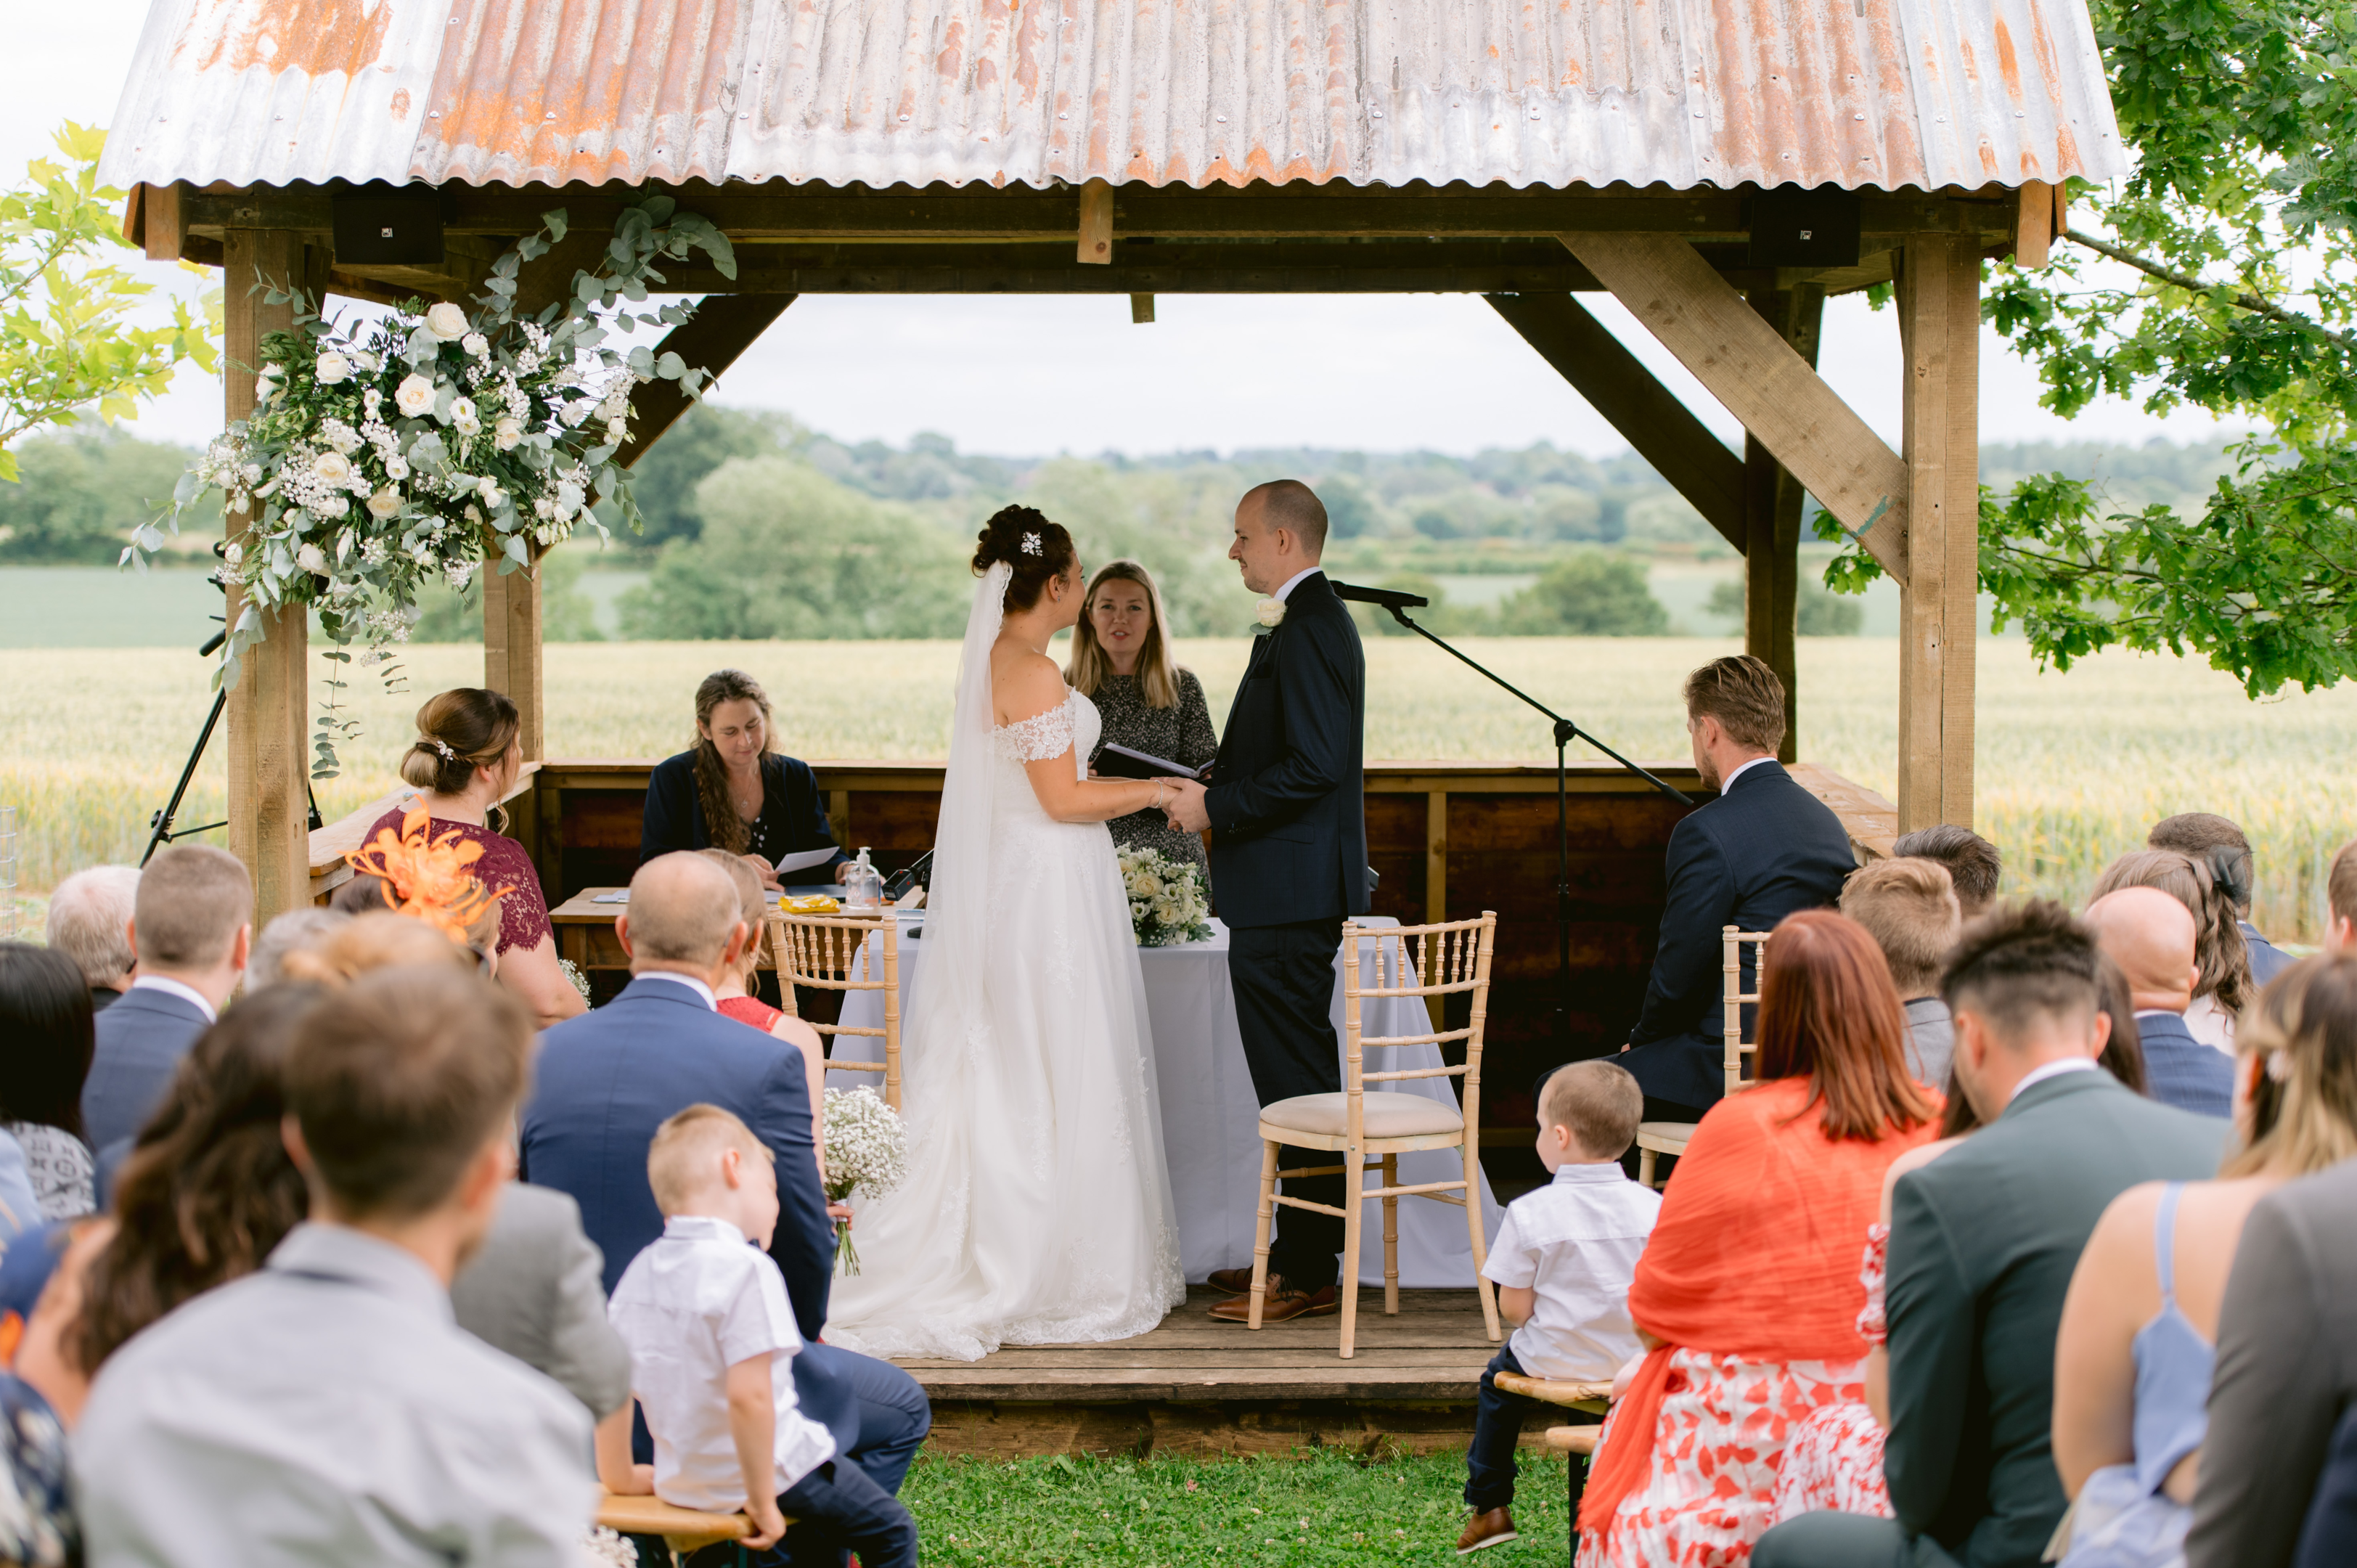 Huntsmill Farm Wedding by Photographer S Howard Photography Ltd 